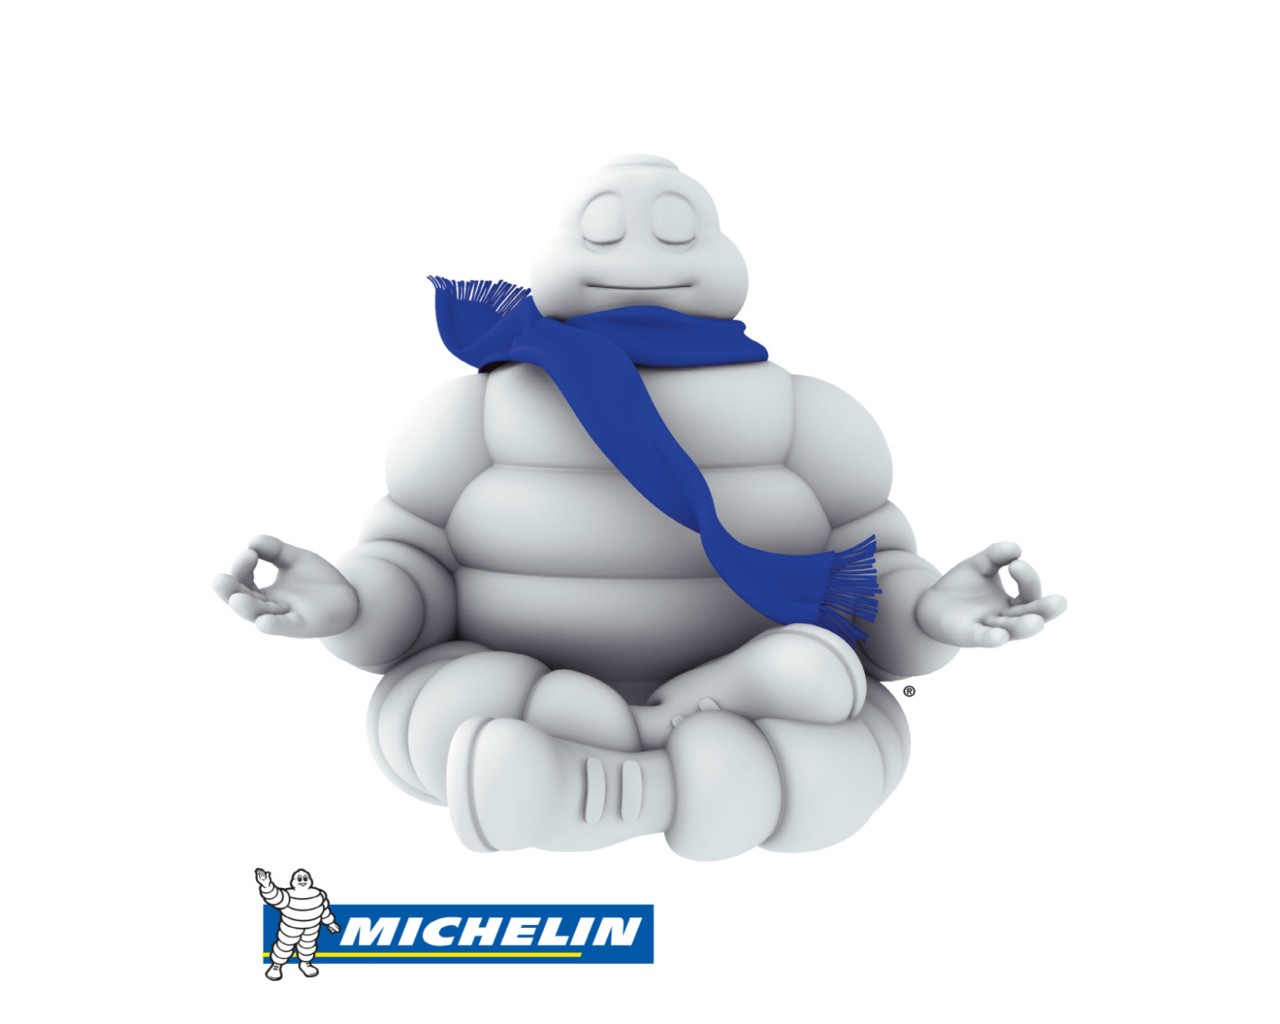 Michelin wallpaper 1280x1024